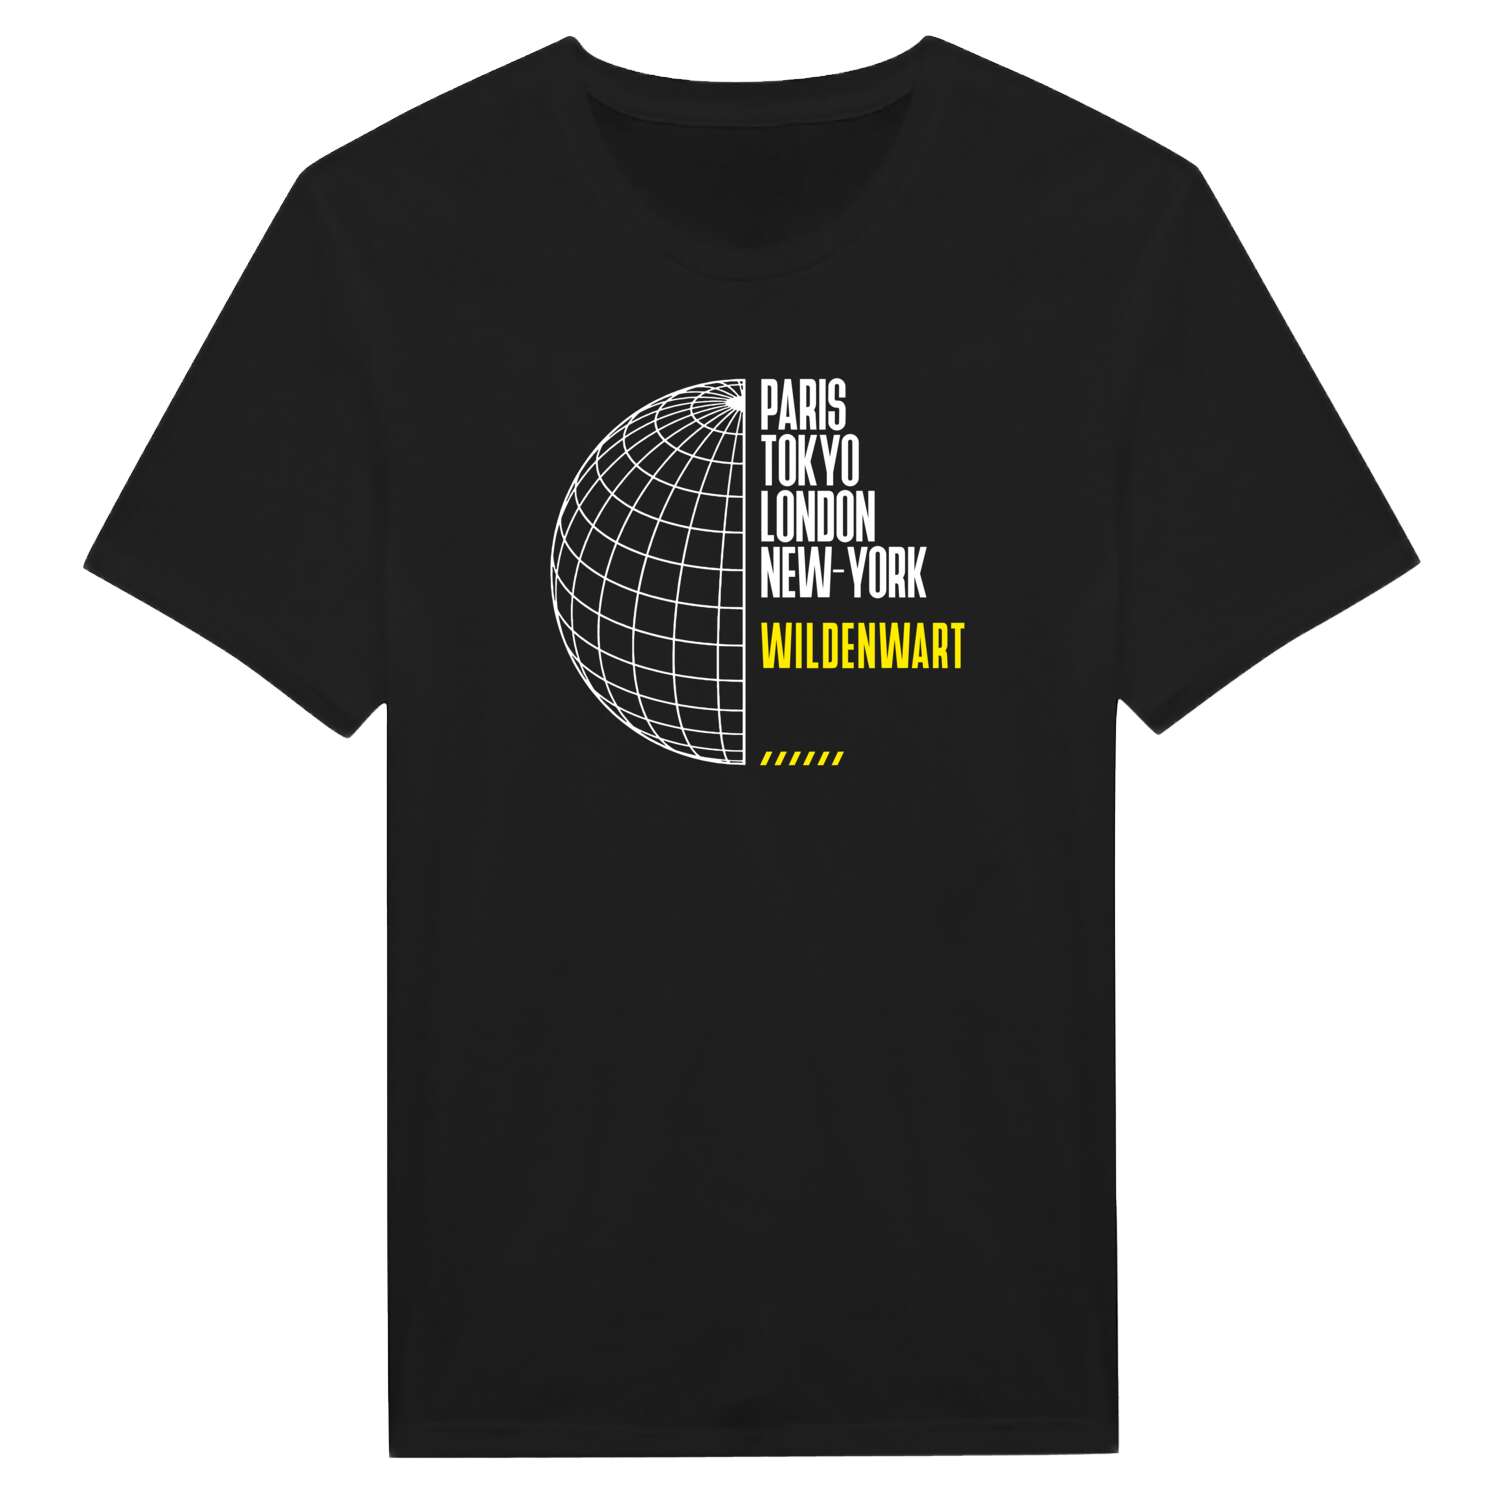 Wildenwart T-Shirt »Paris Tokyo London«